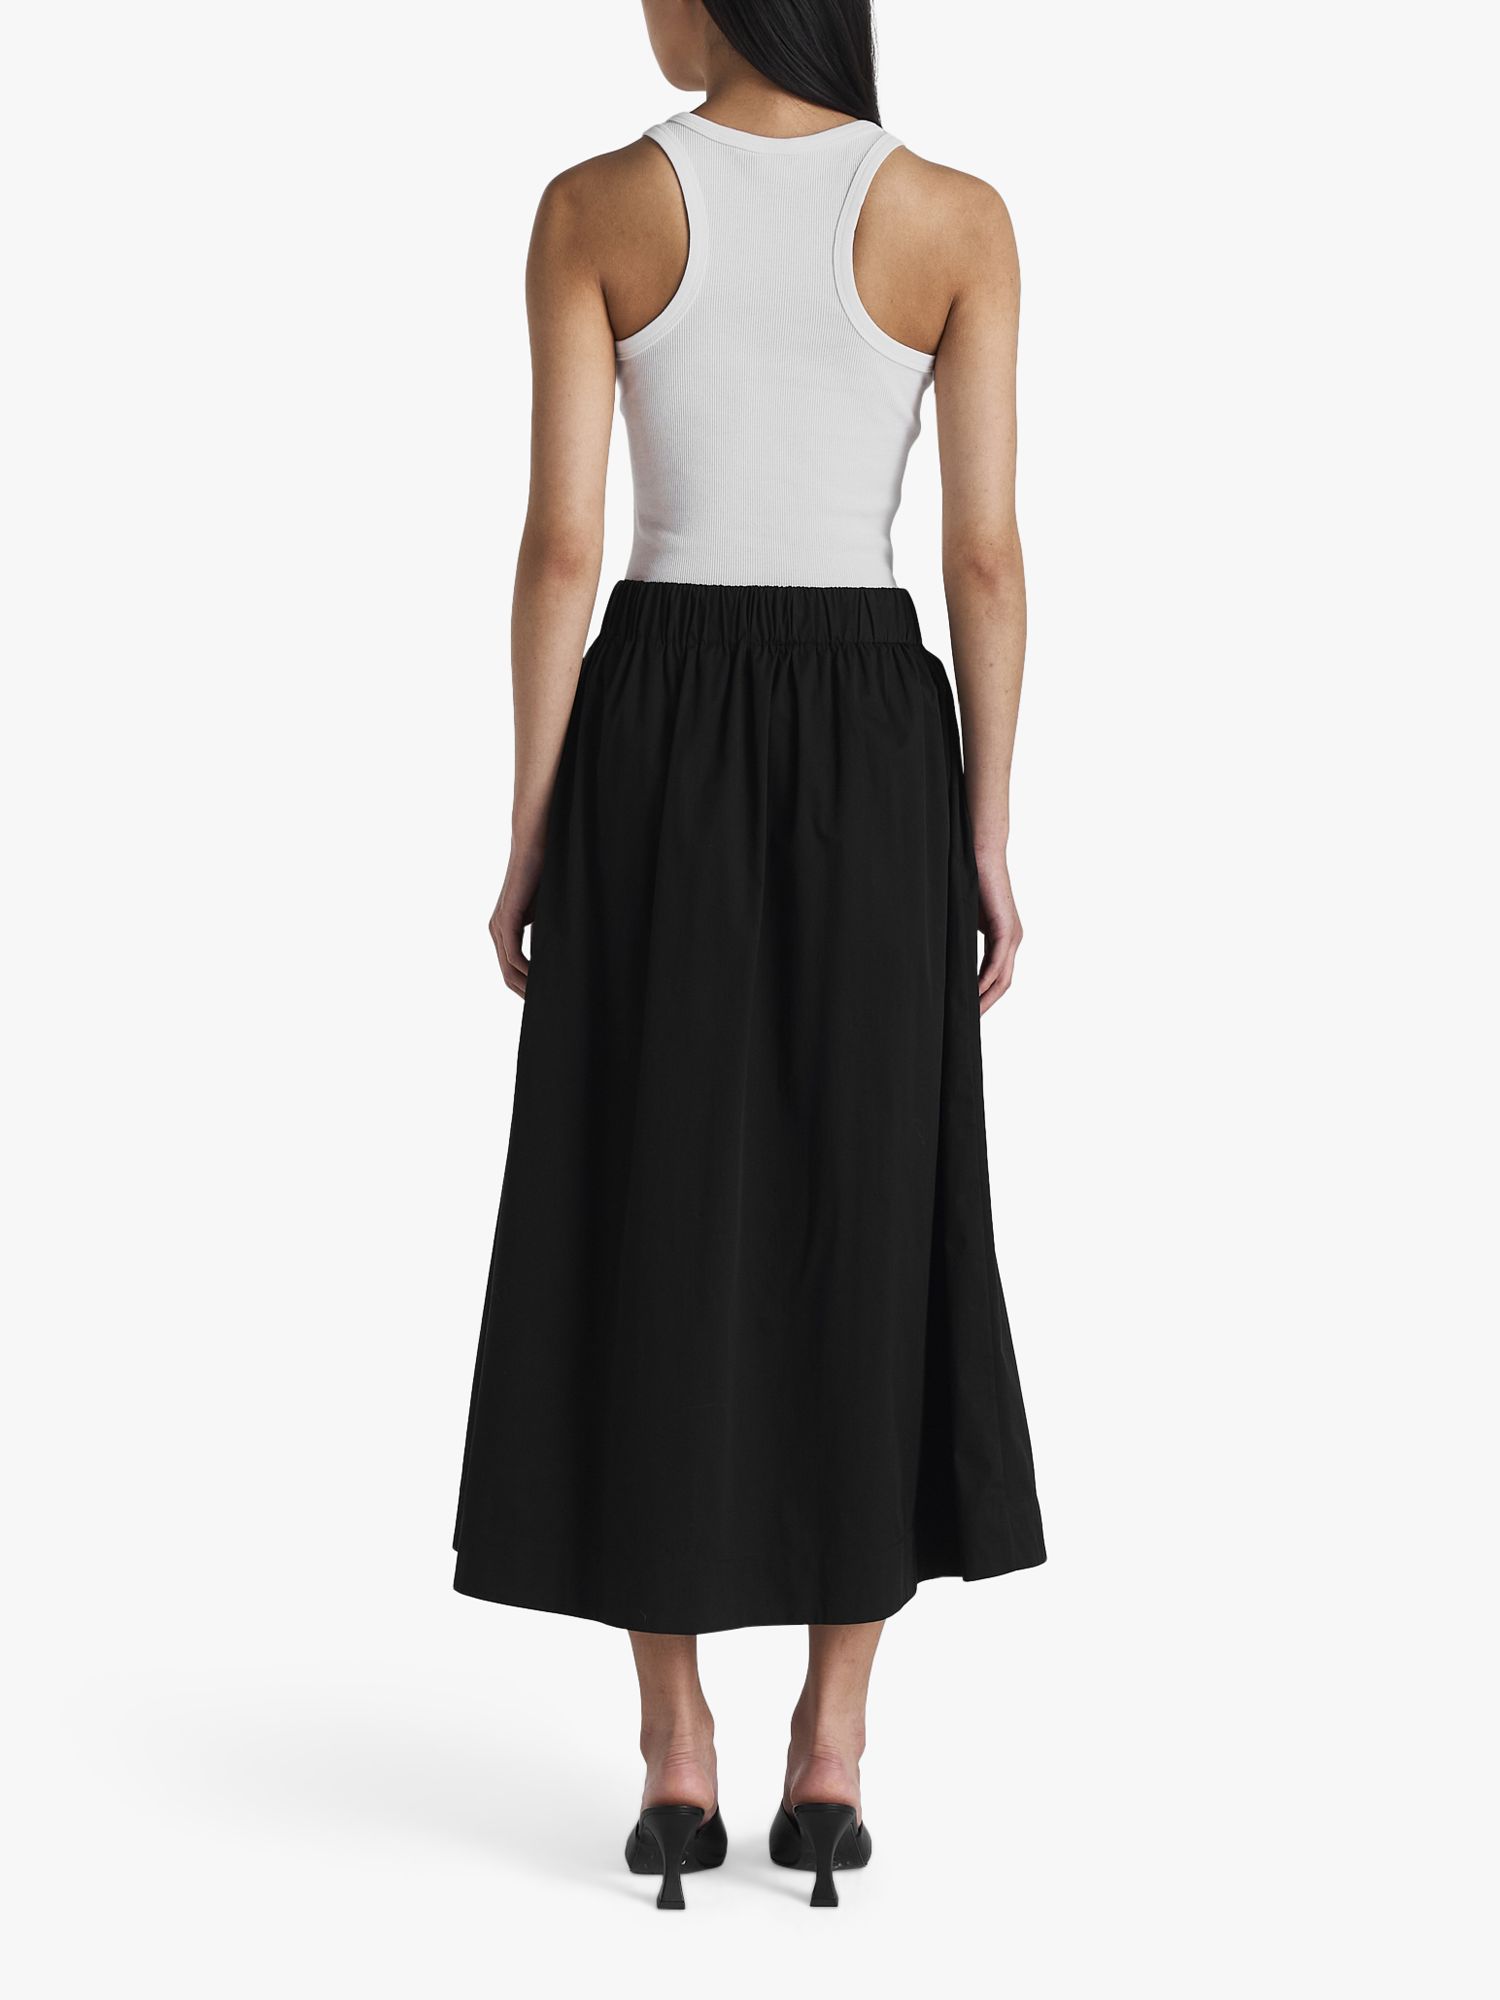 Buy Twist & Tango Freya Soft Cotton Blend Midi Skirt, Black Online at johnlewis.com